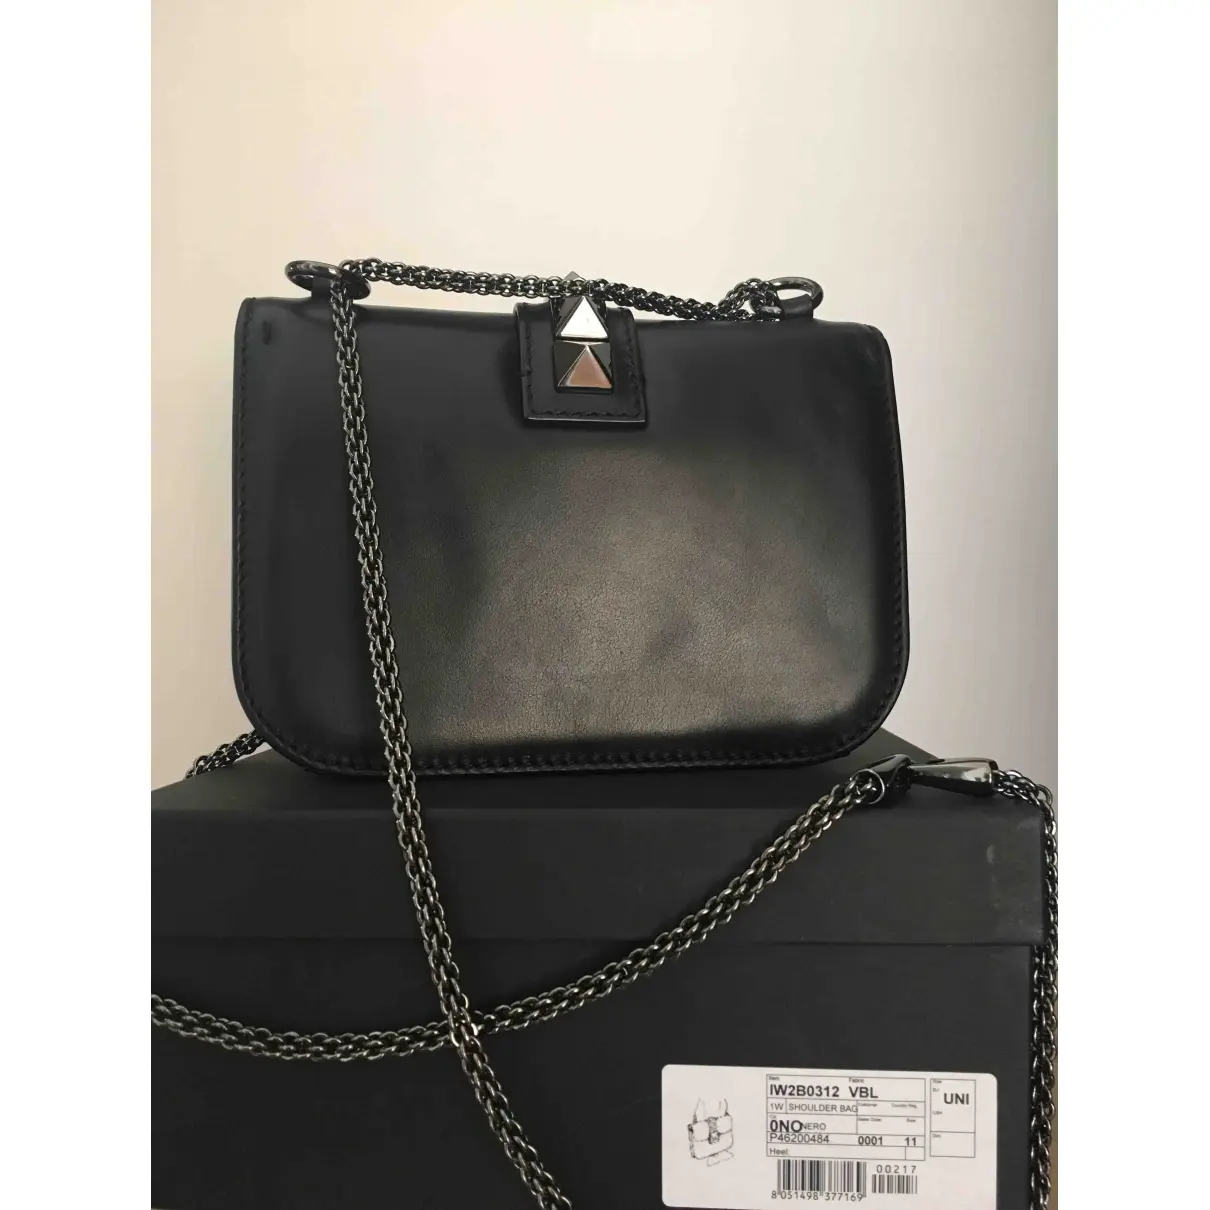 Valentino Garavani Glam Lock leather handbag for sale